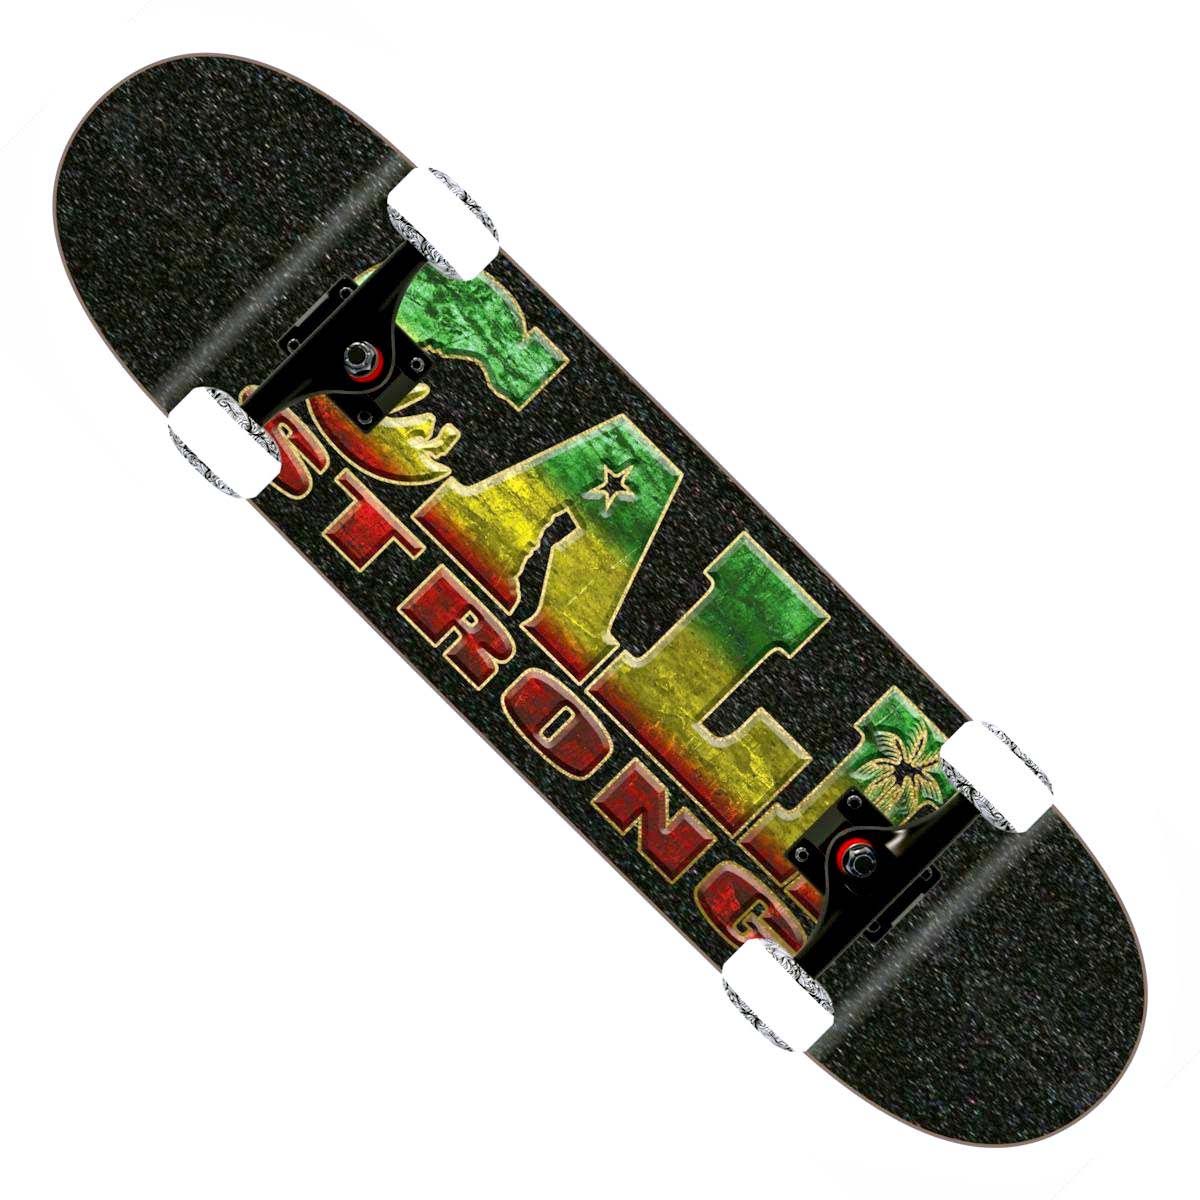 CALI Strong State Rasta Skateboard Trick Complete - Trick Skateboard - Image 1 - CALI Strong